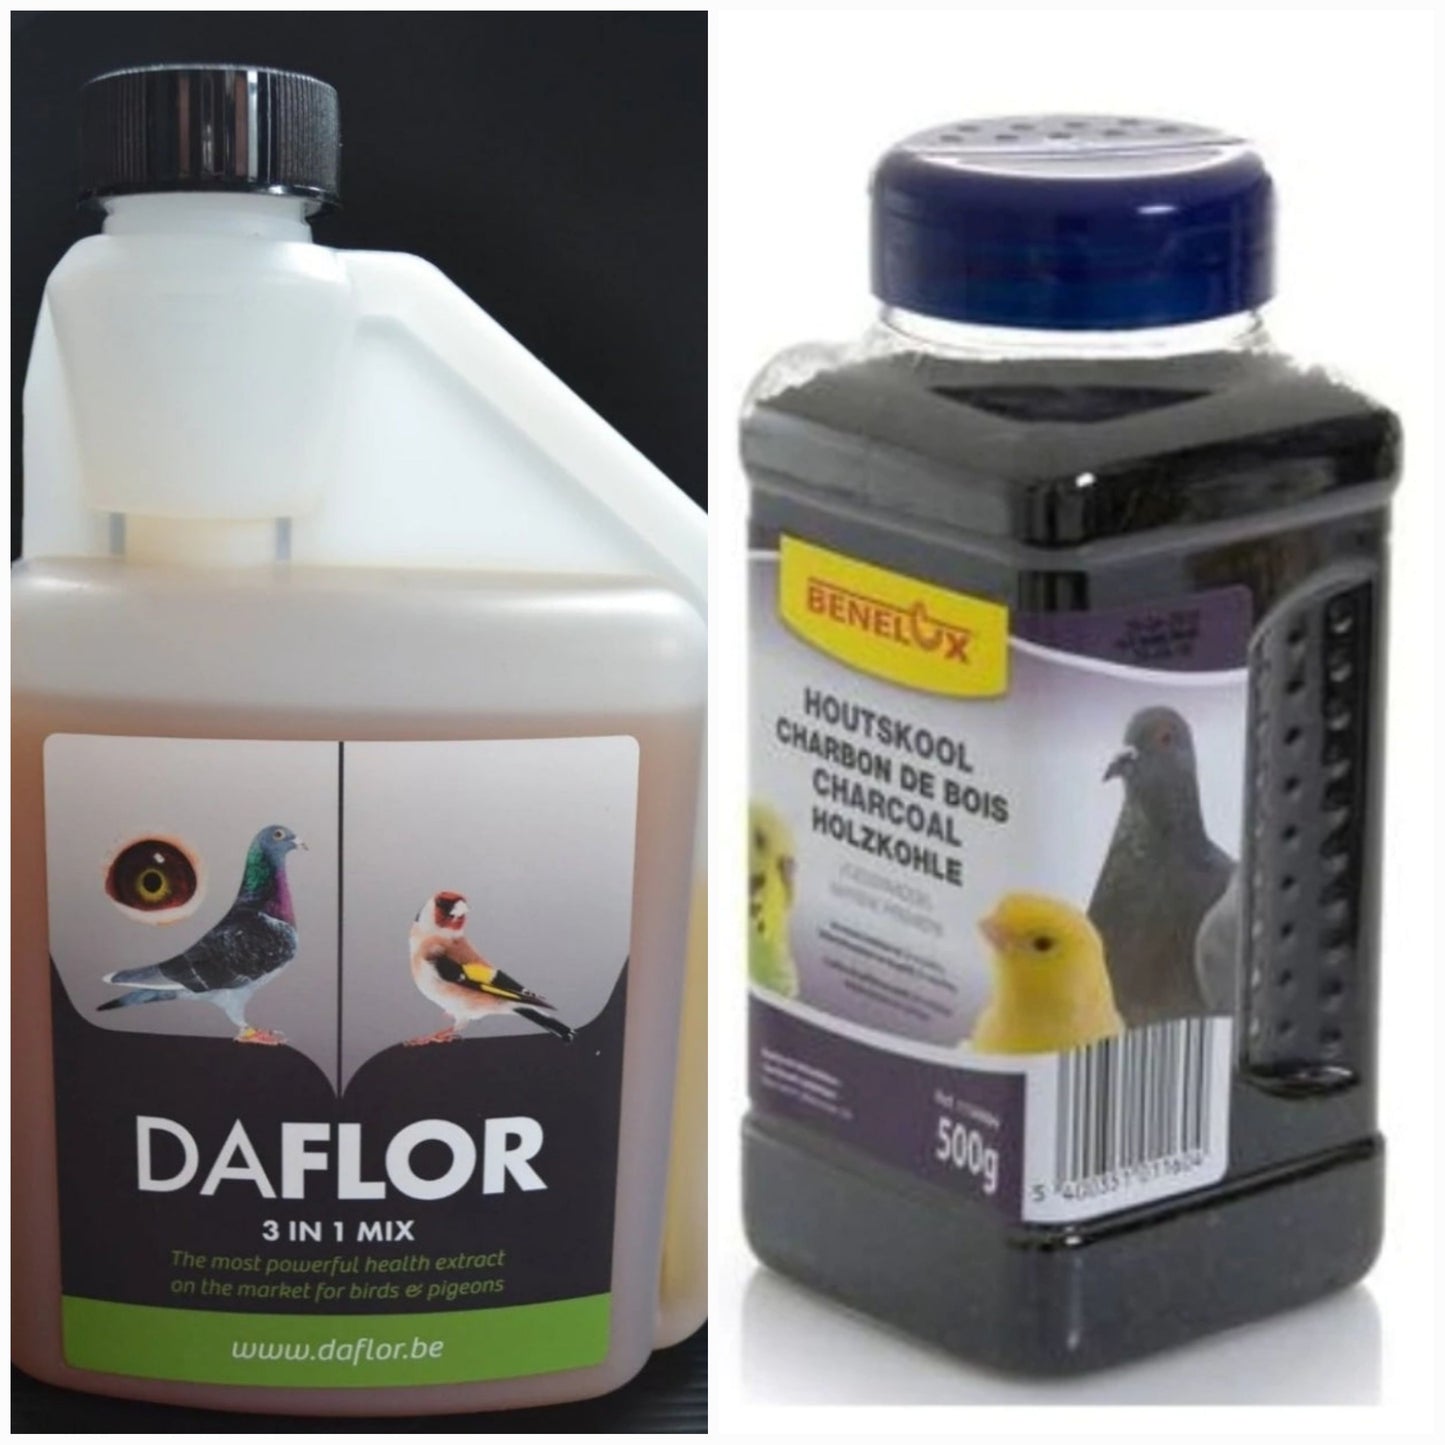 Daflor 3in1 Mix
250ml + Houtskool 500 gram